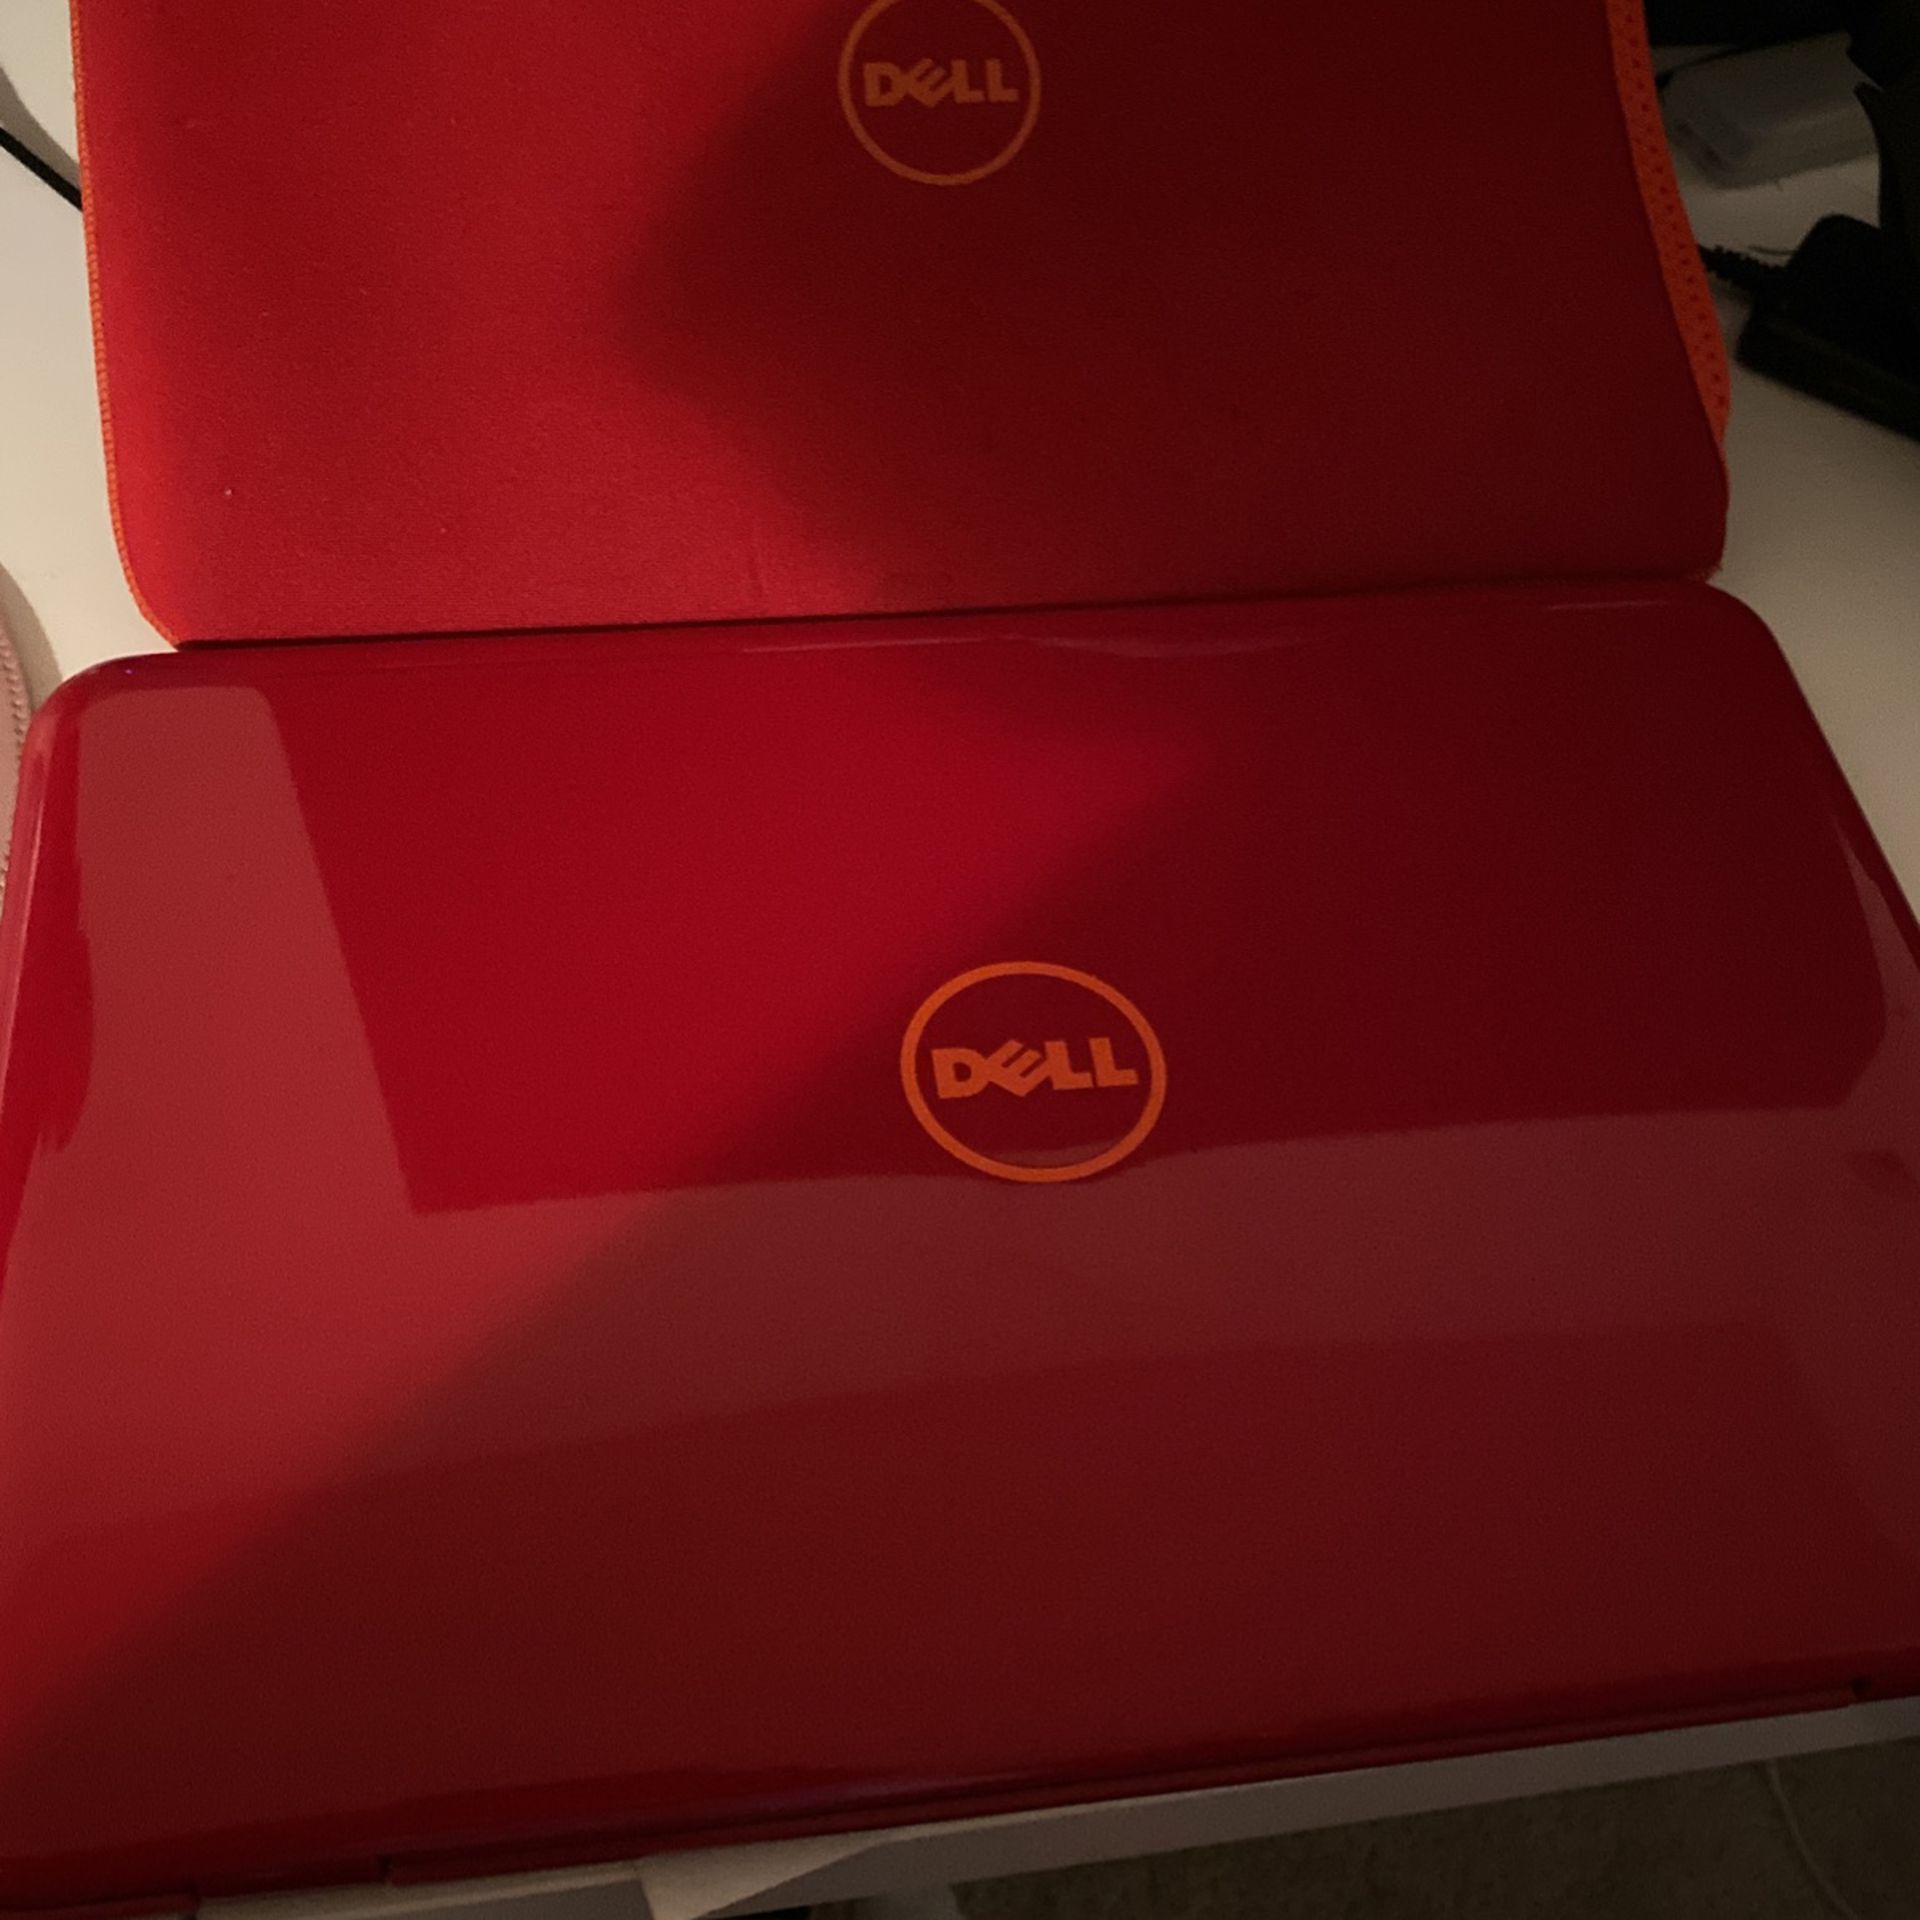 Dell Inspiron Laptop 2017 32gb Model 